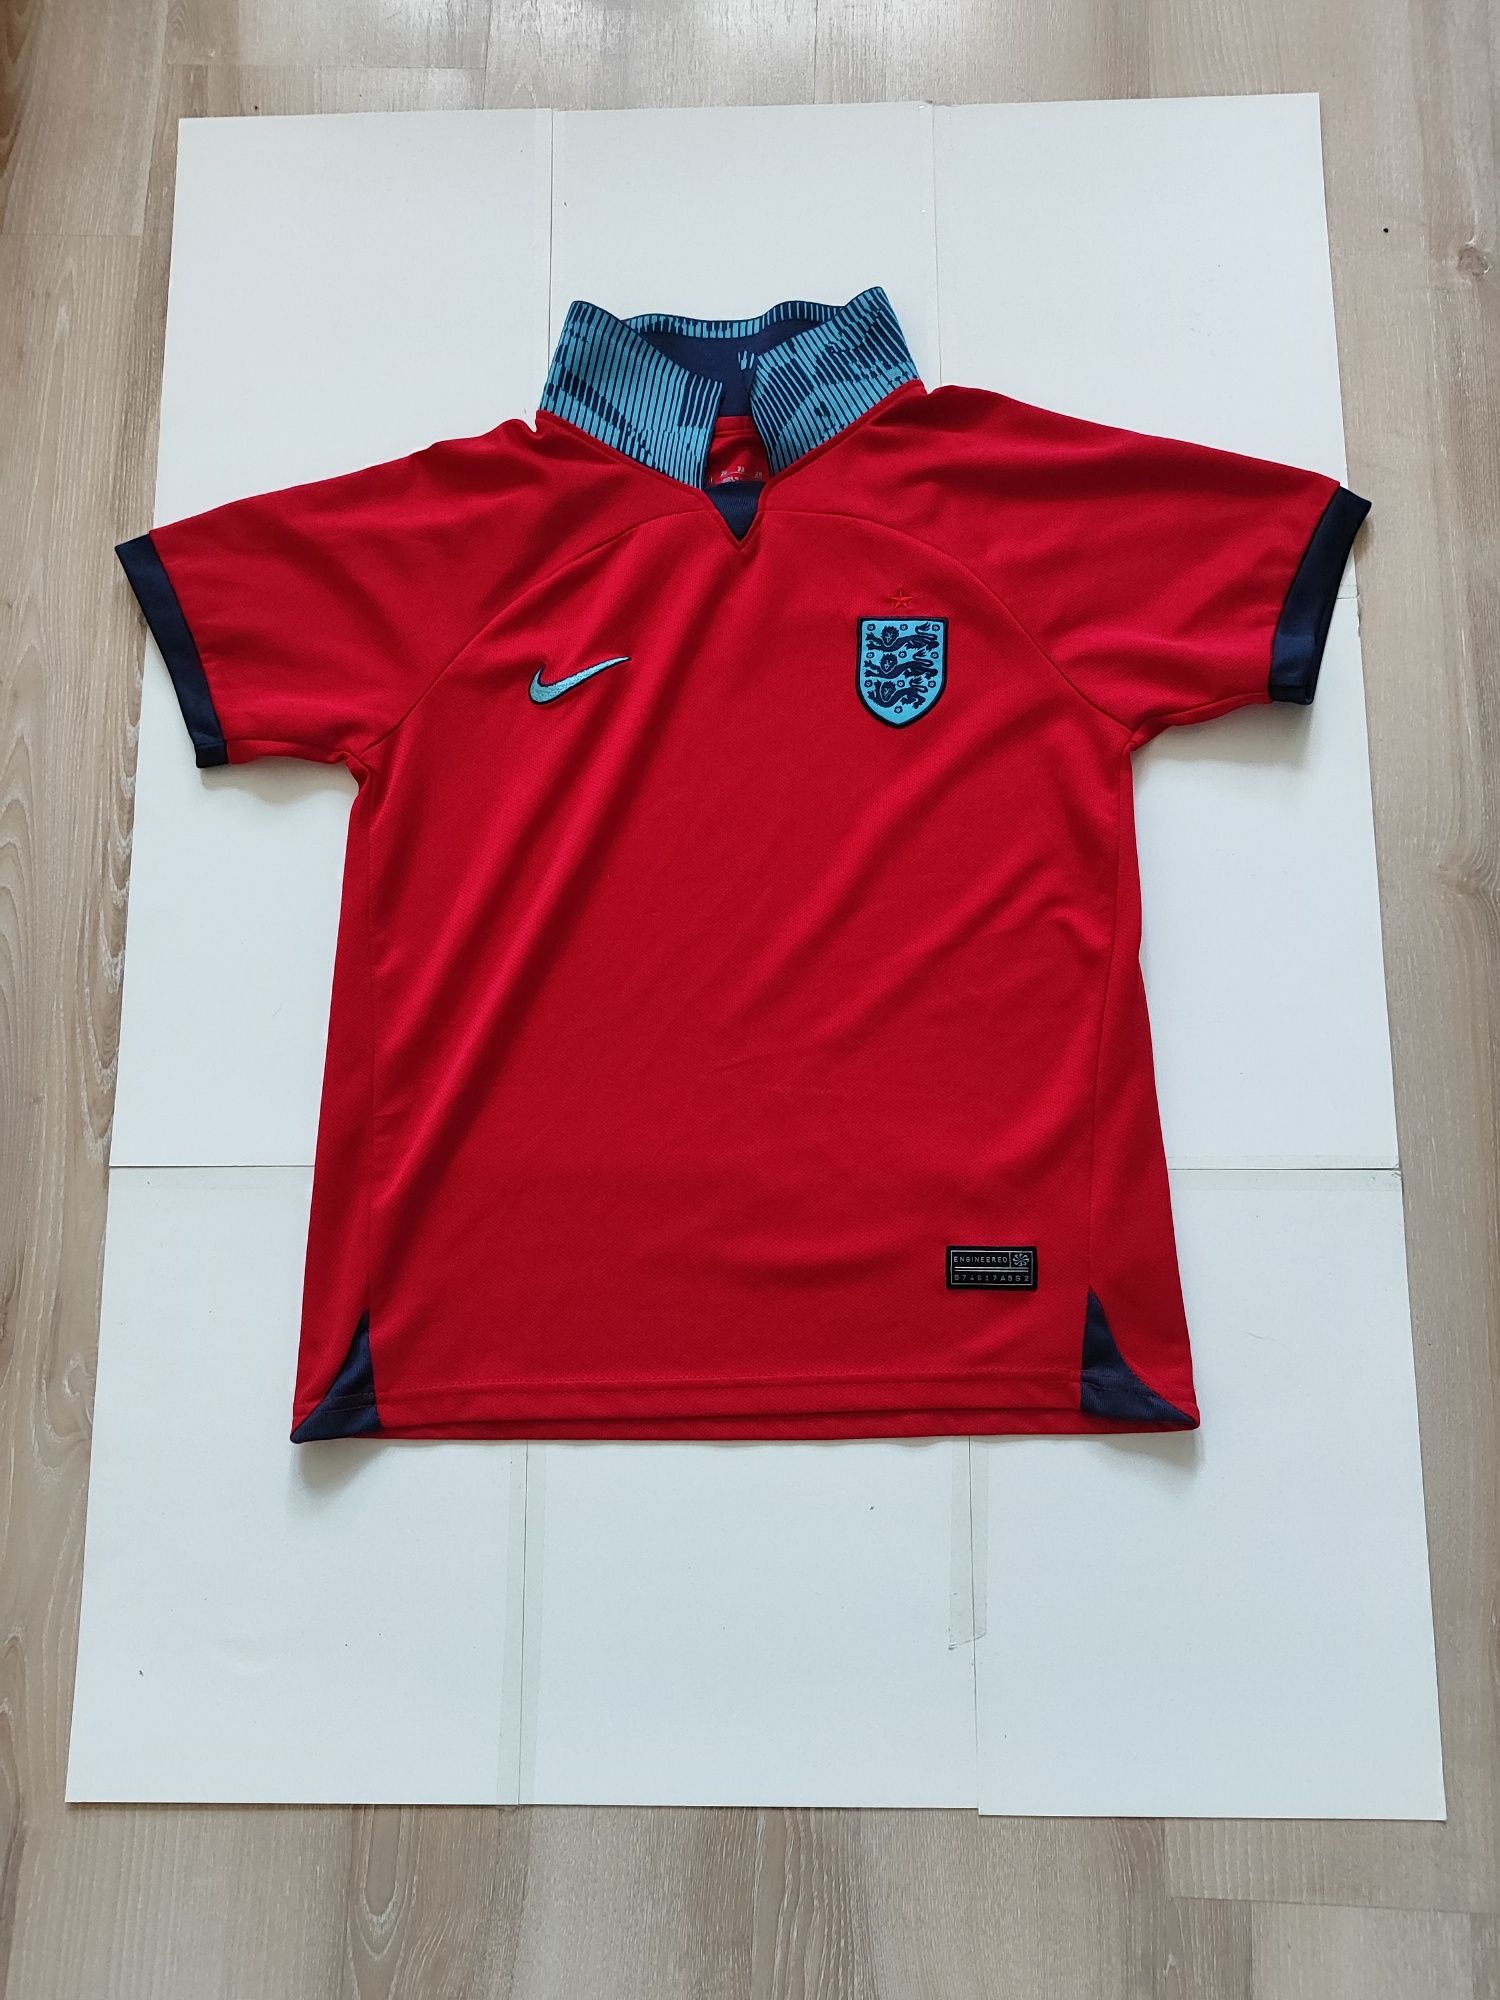 --- Anglia koszulka piłkarska firmy nike ---